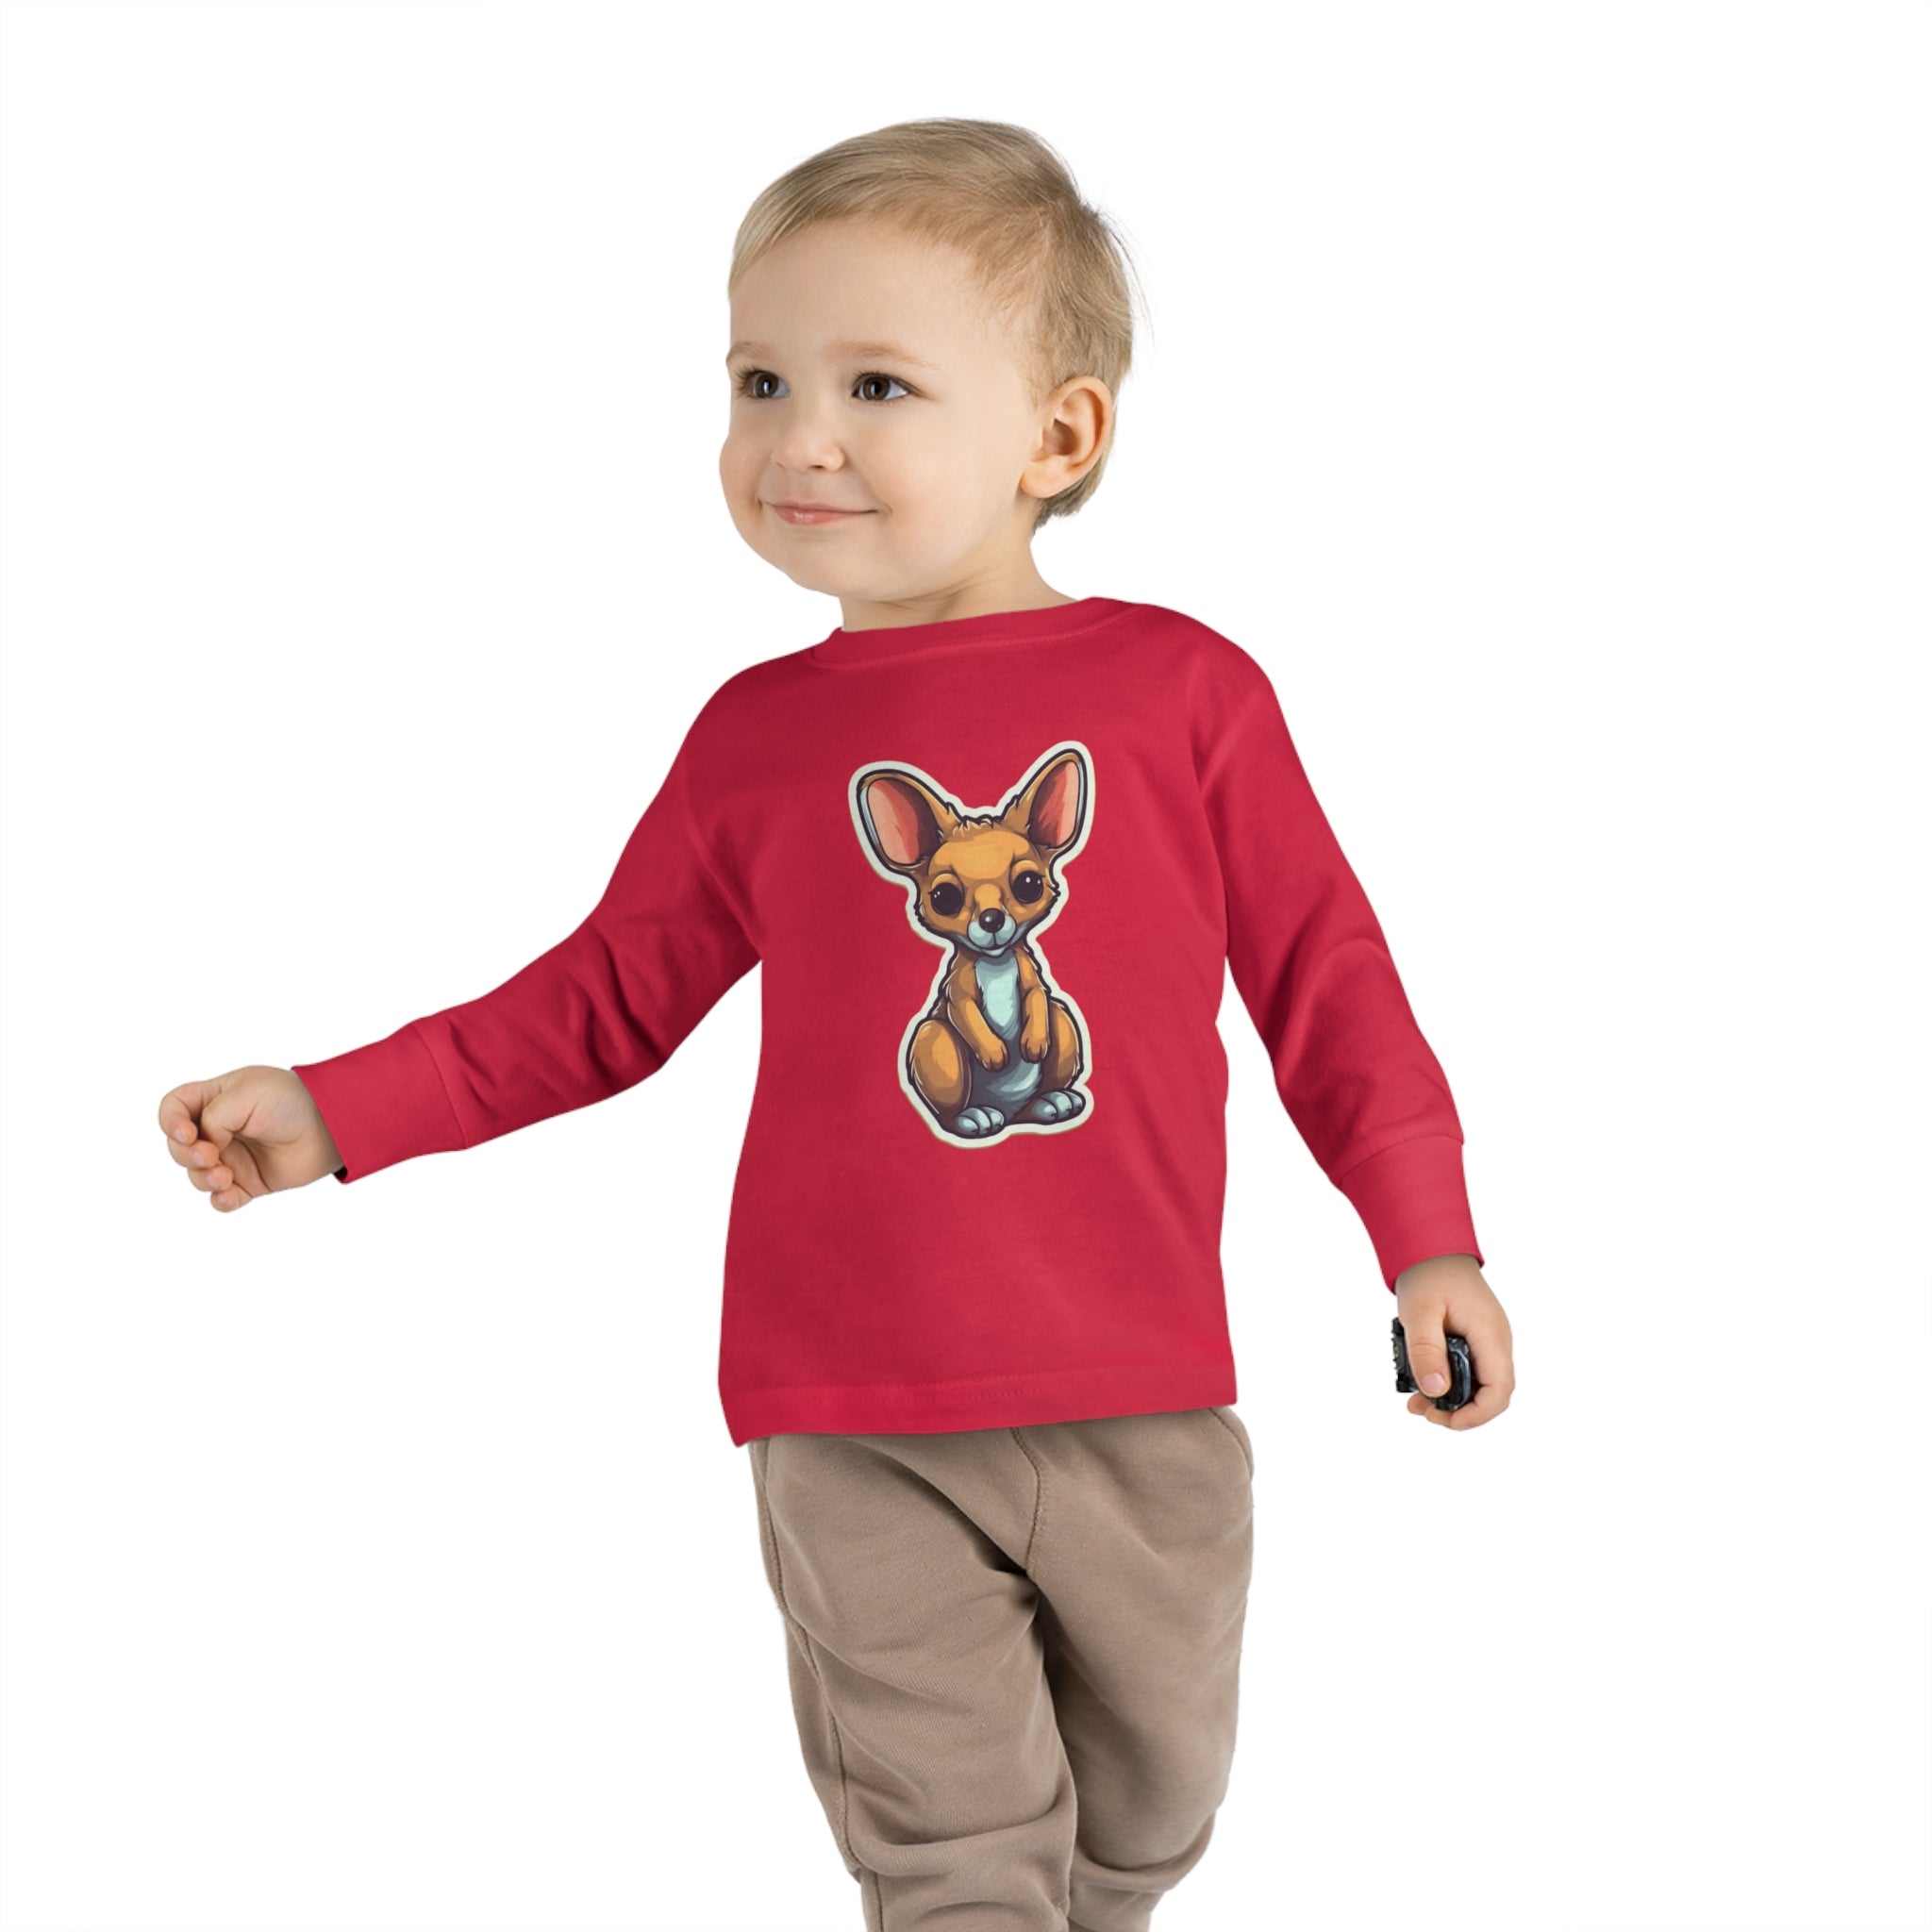 Toddler Long Sleeve Tee - Kangaroo Joey